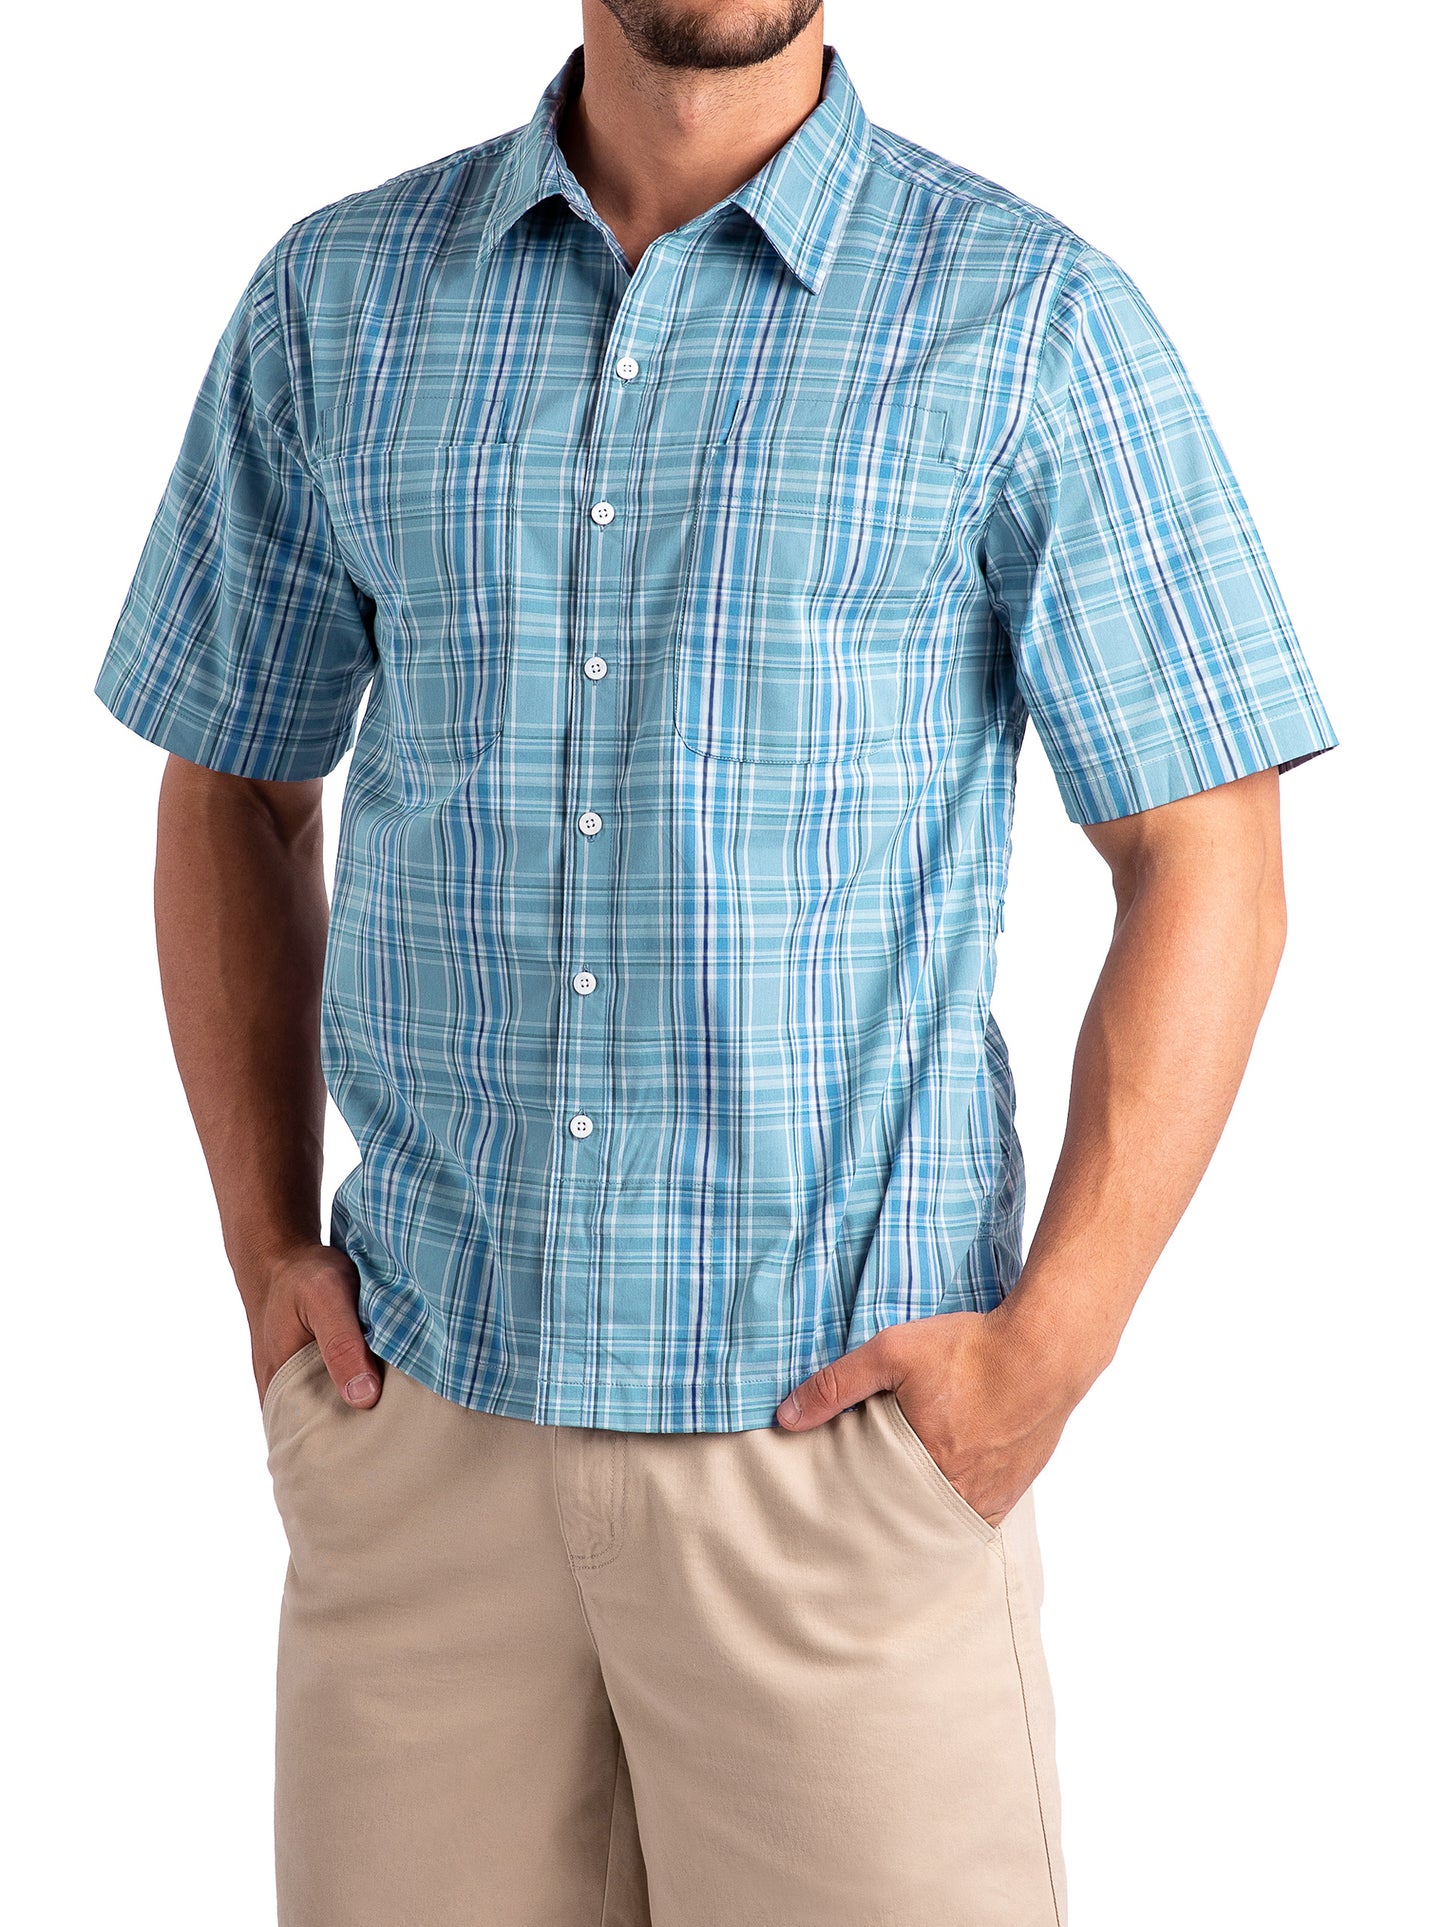 Docksider Men's Buttondown Shirt with Hidden Pockets | SCOTTeVEST